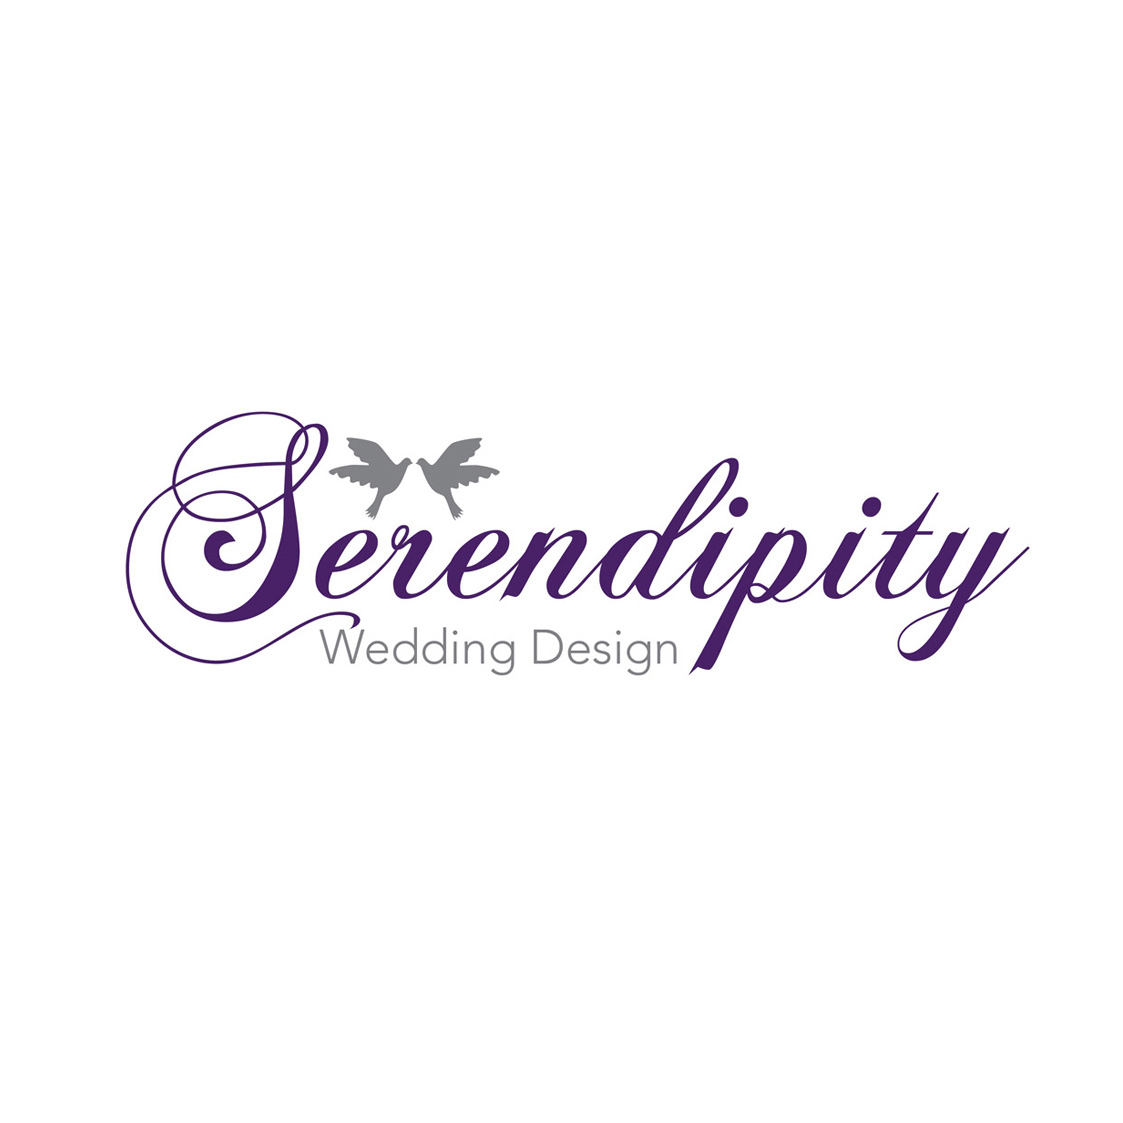 Serendipity Logo - Wedding stationary by Serendipity Wedding Design in Stourbridge